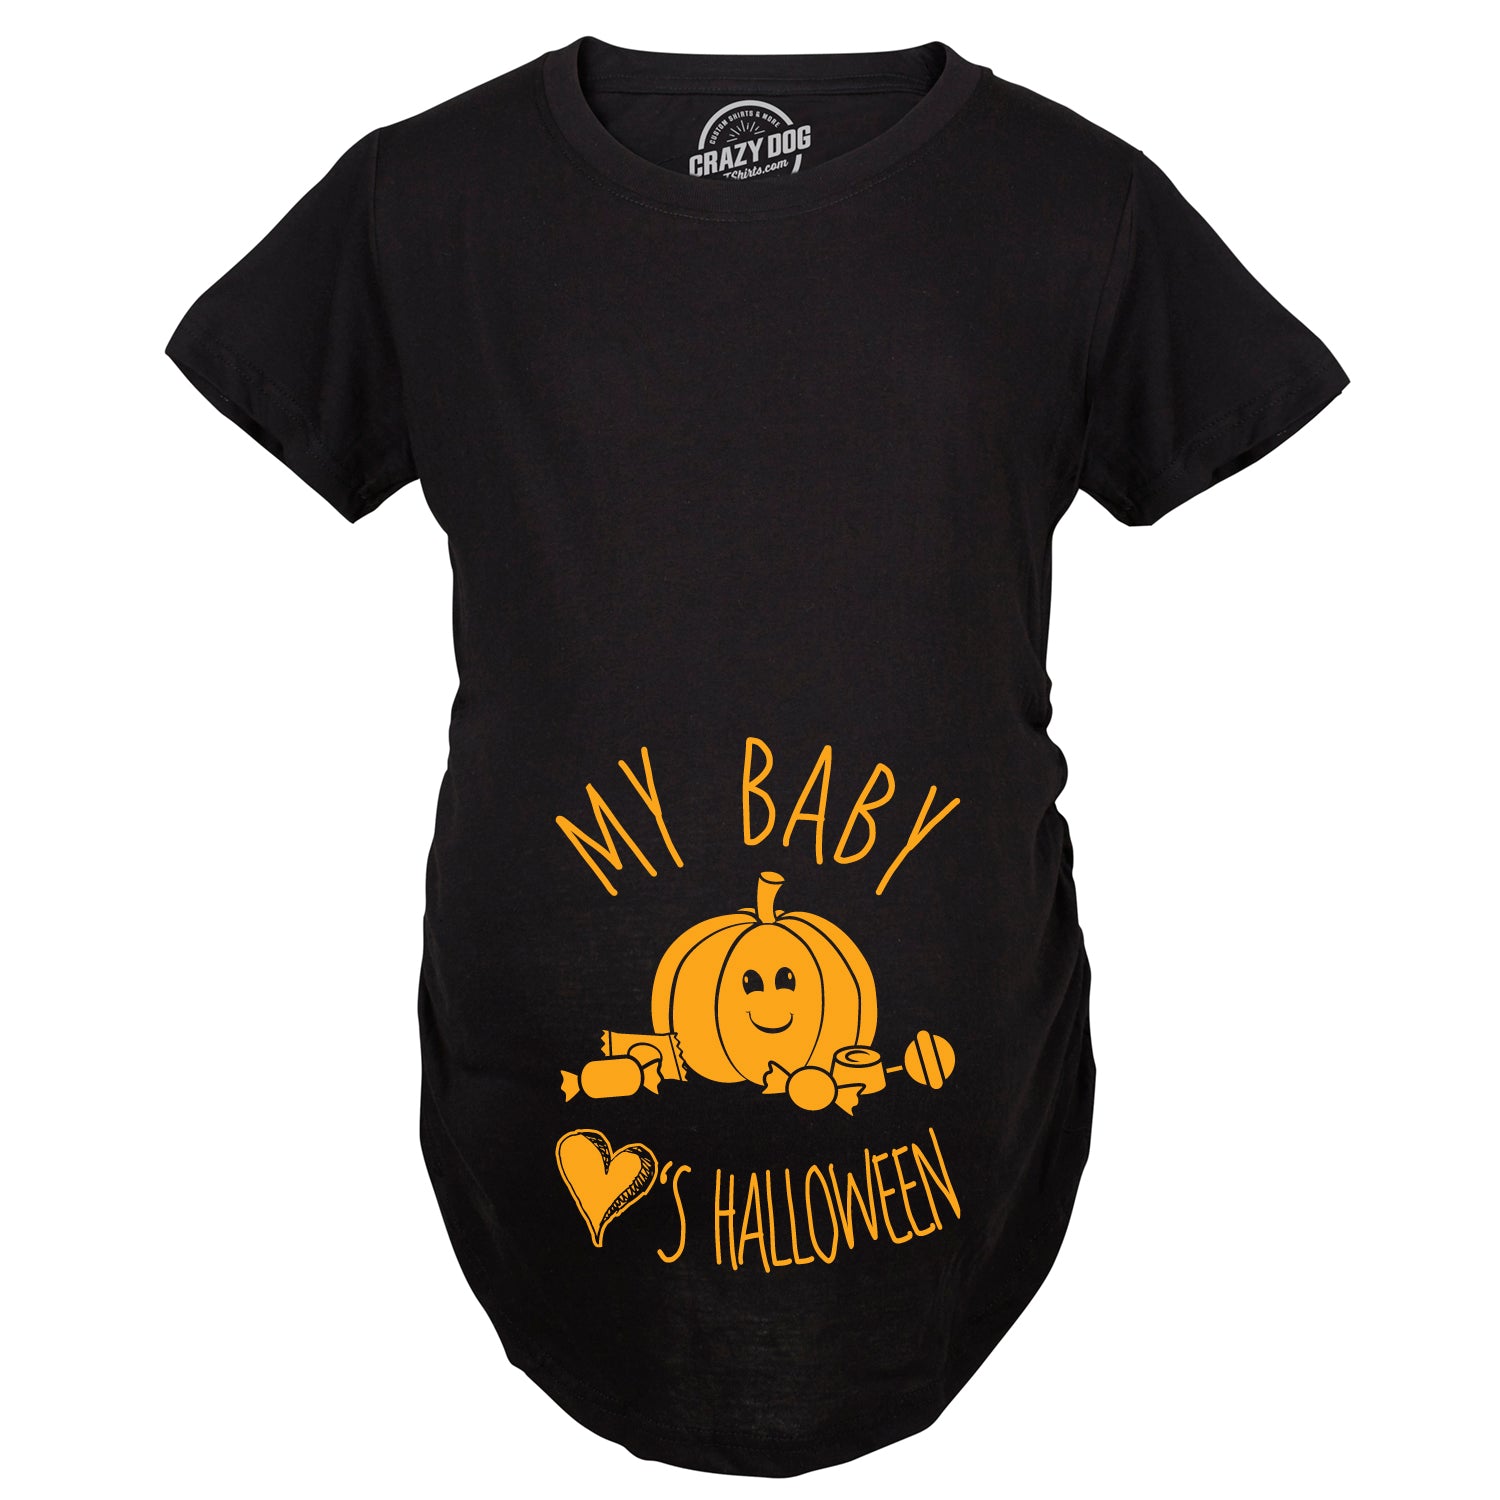 Funny Black My Baby Loves Halloween Maternity T Shirt Nerdy Halloween Tee